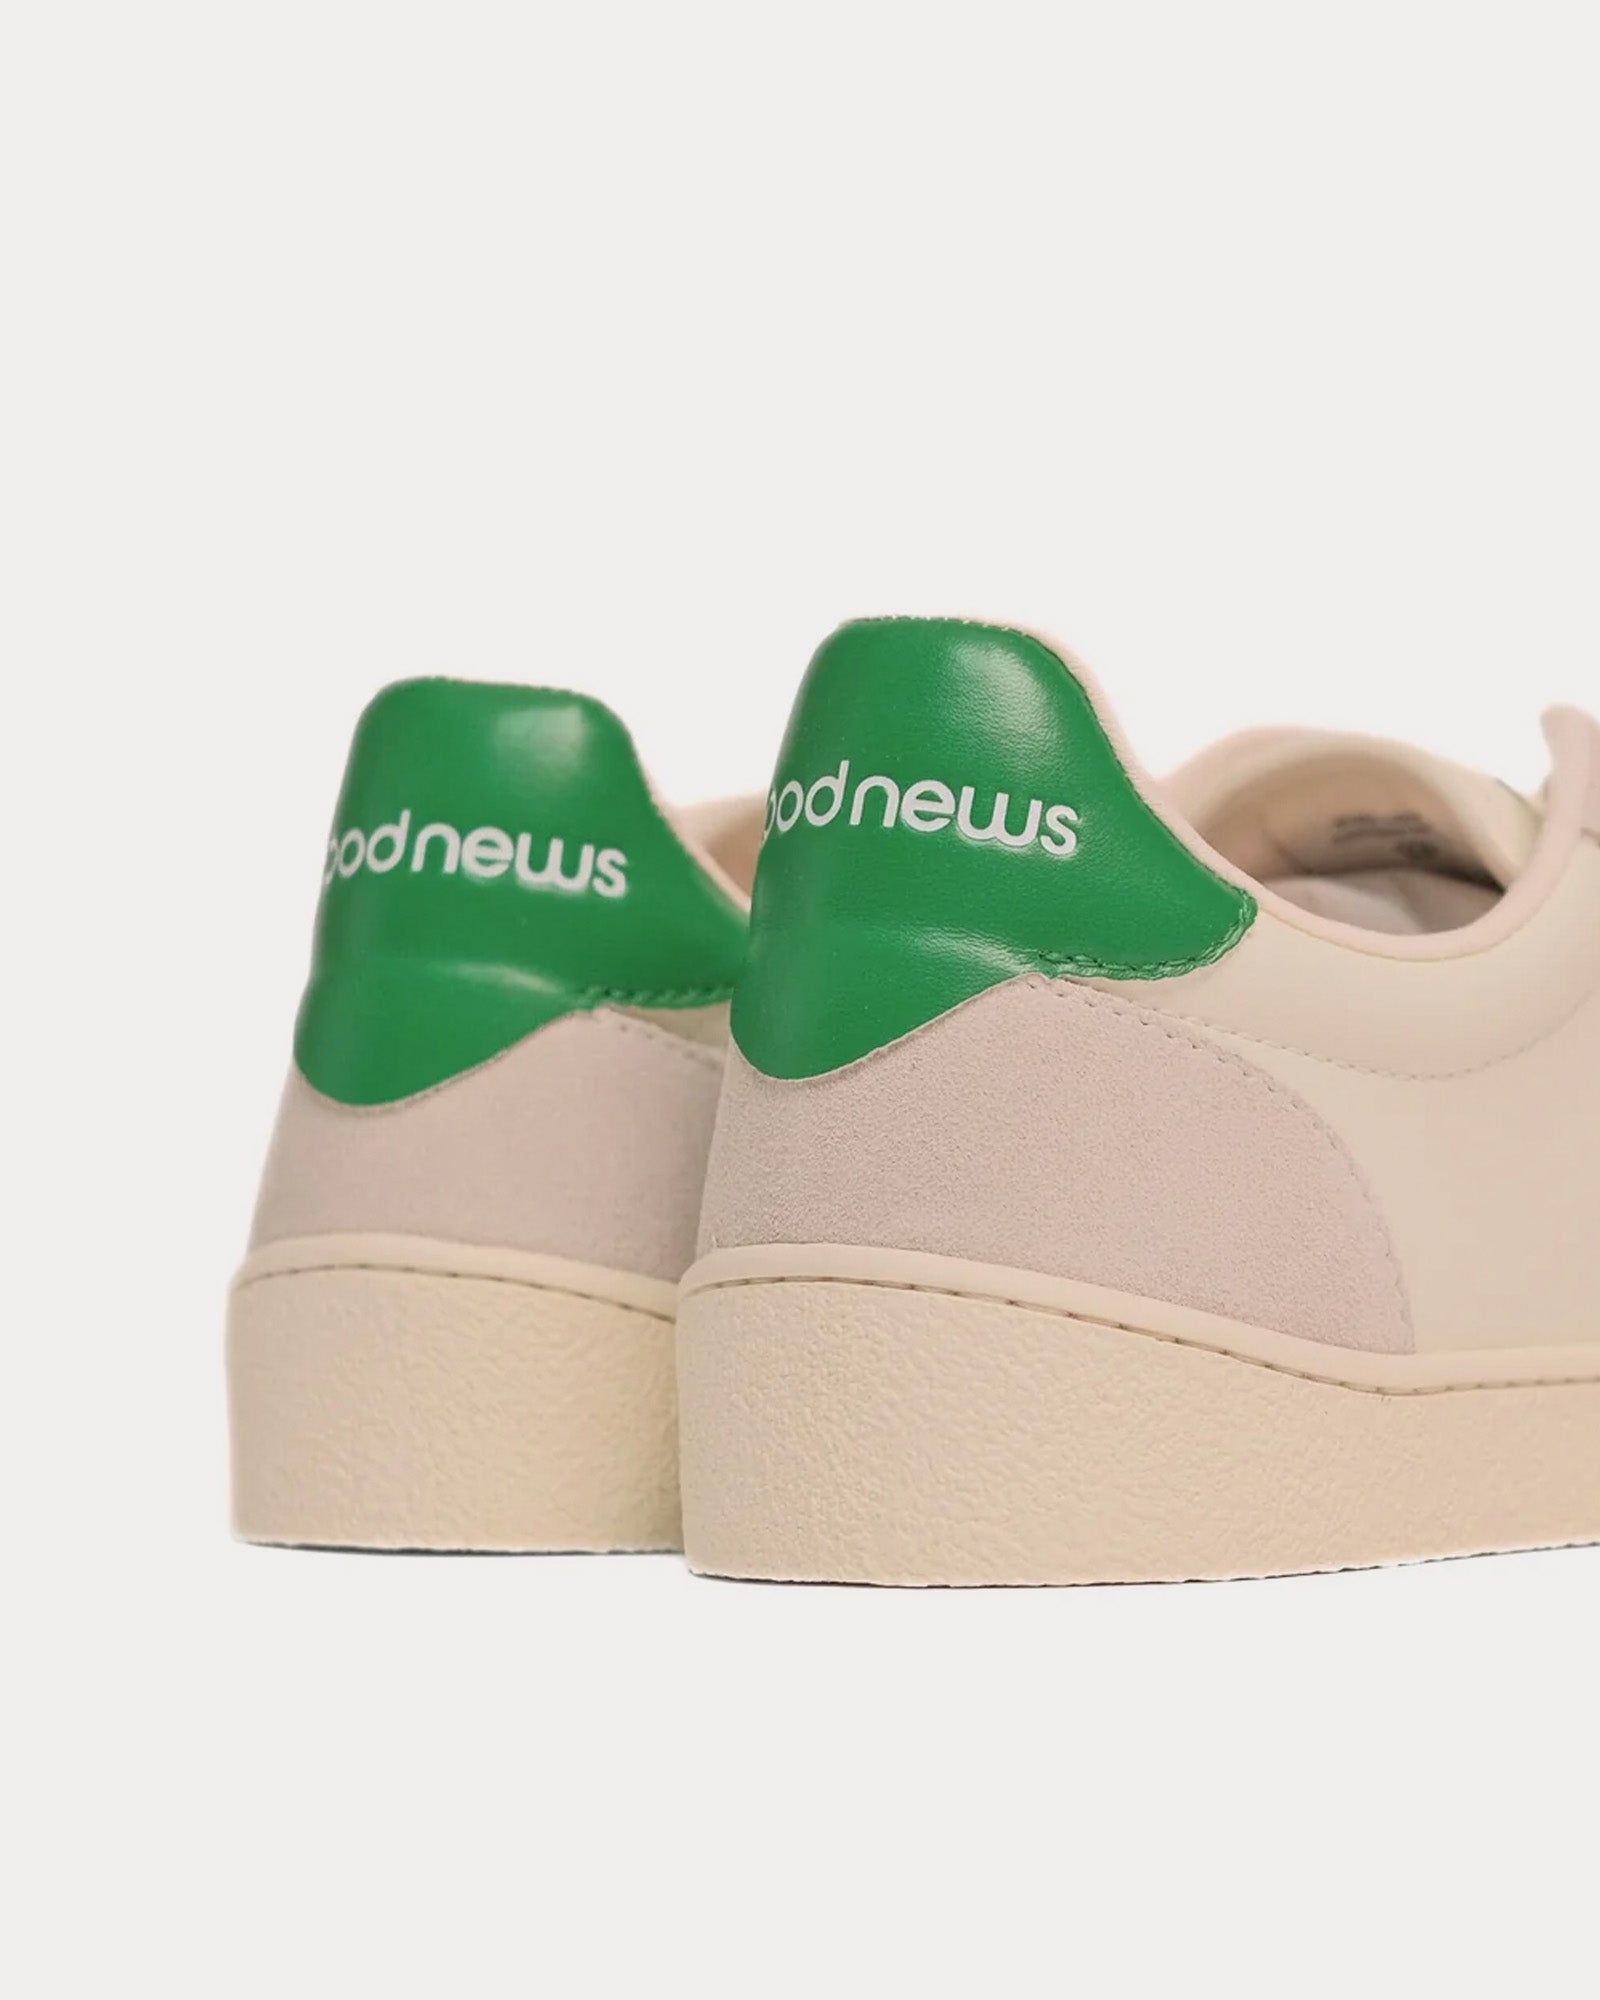 Good News - Venus White / Green Low Top Sneakers